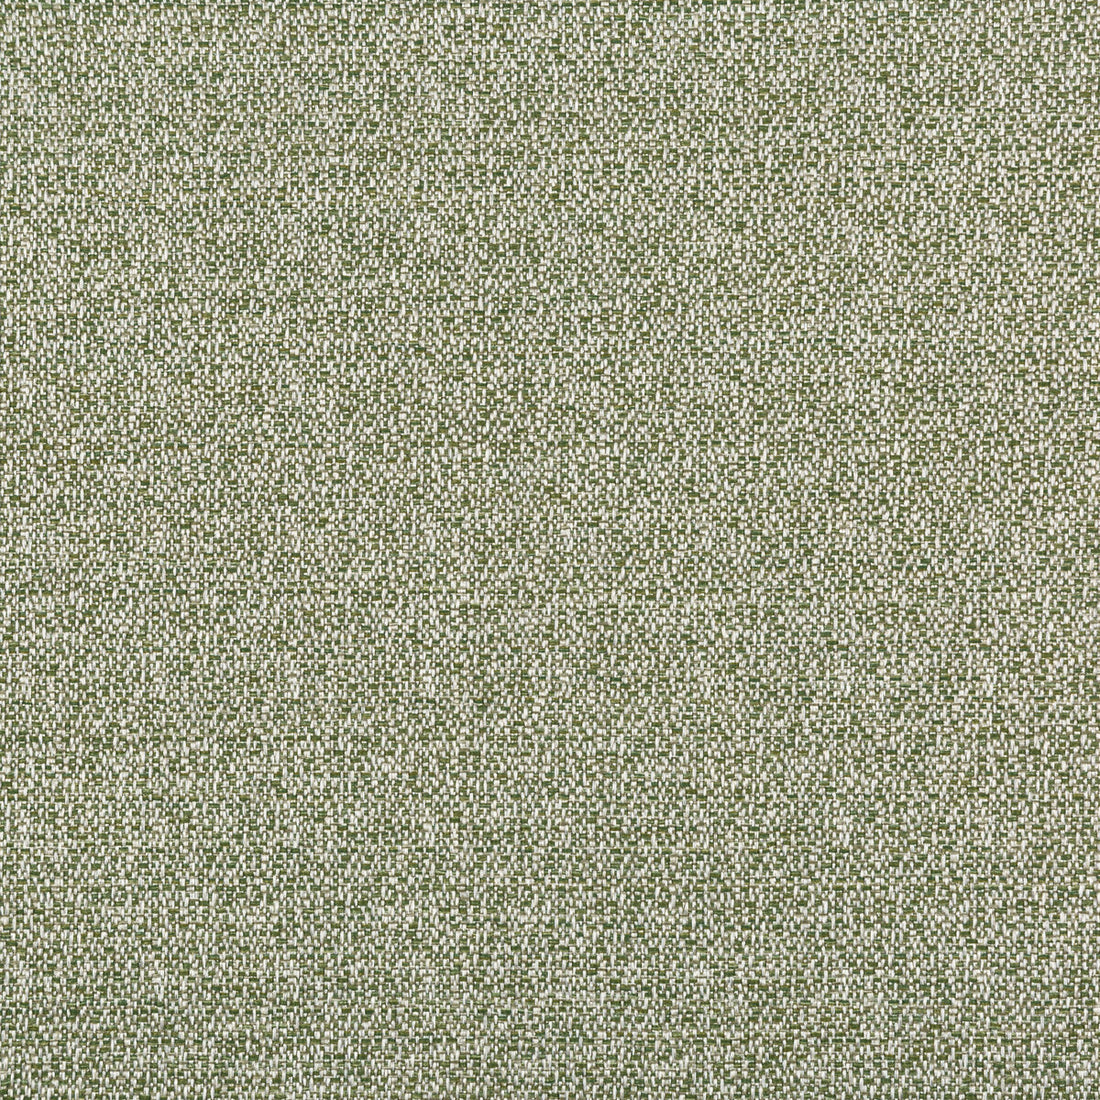 Kravet Smart fabric in 35971-311 color - pattern 35971.311.0 - by Kravet Smart in the Performance Kravetarmor collection